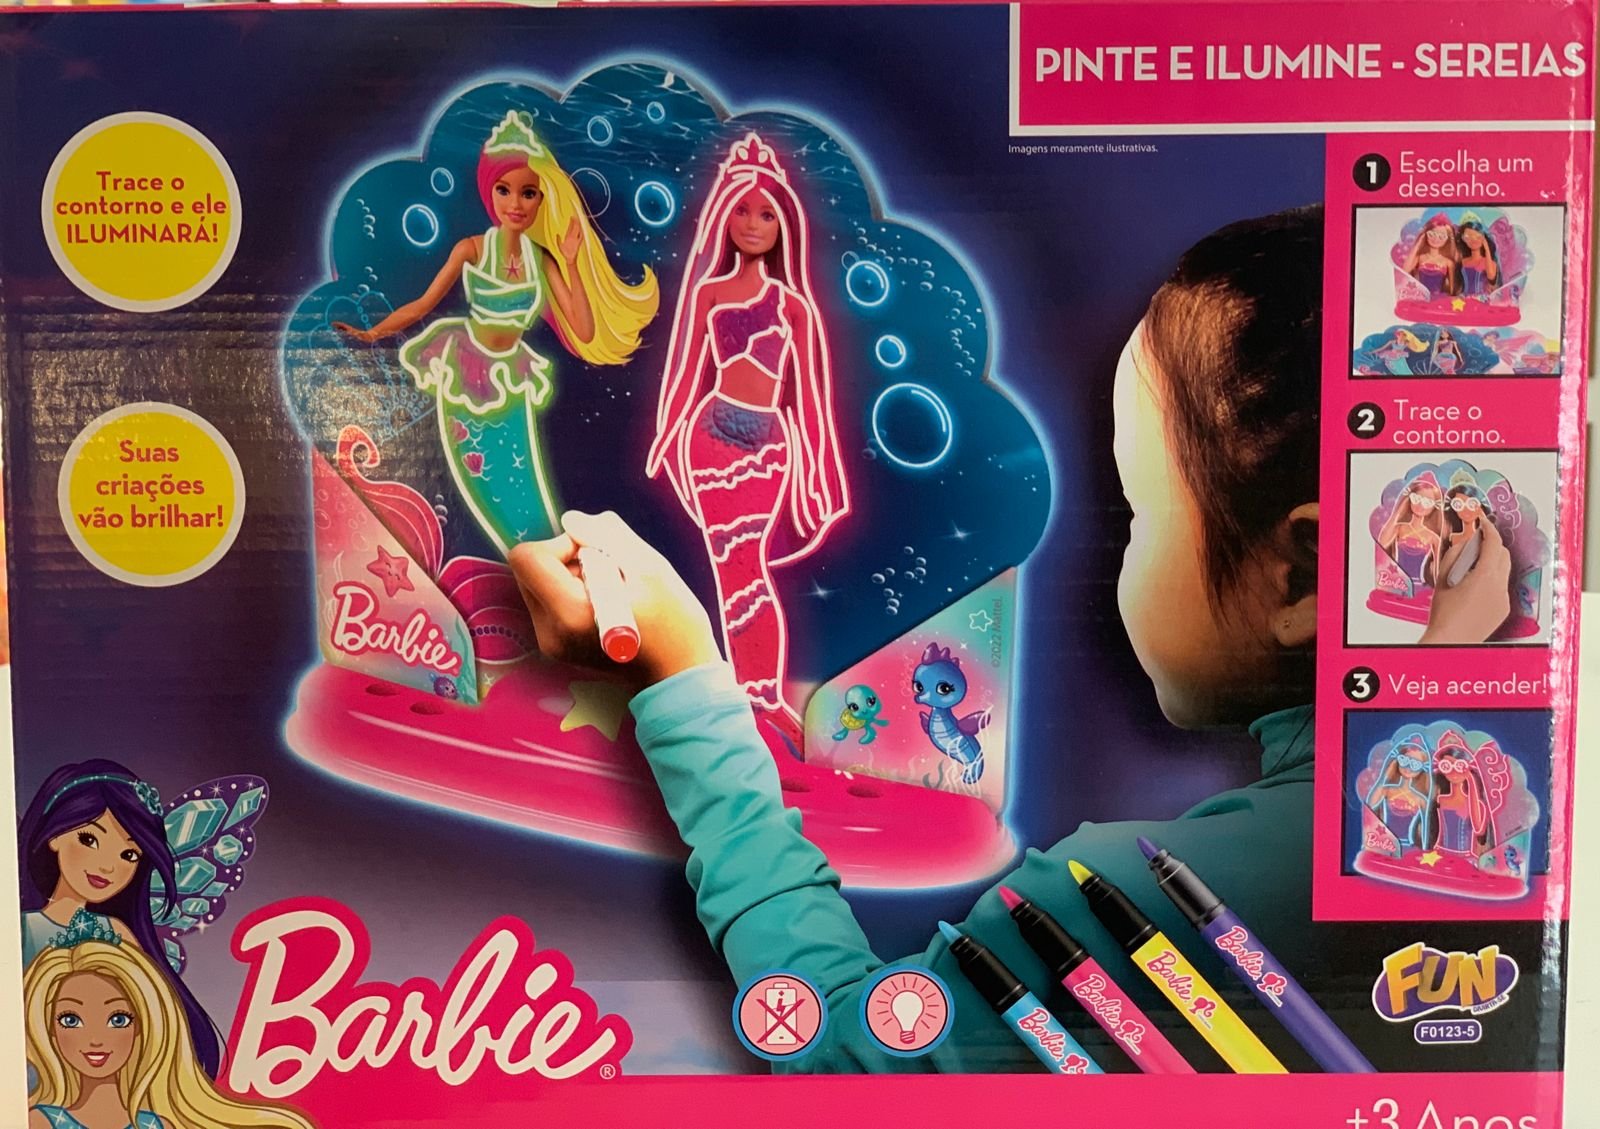 Barbie Pinte E Ilumine Fadas Fun - Papellotti